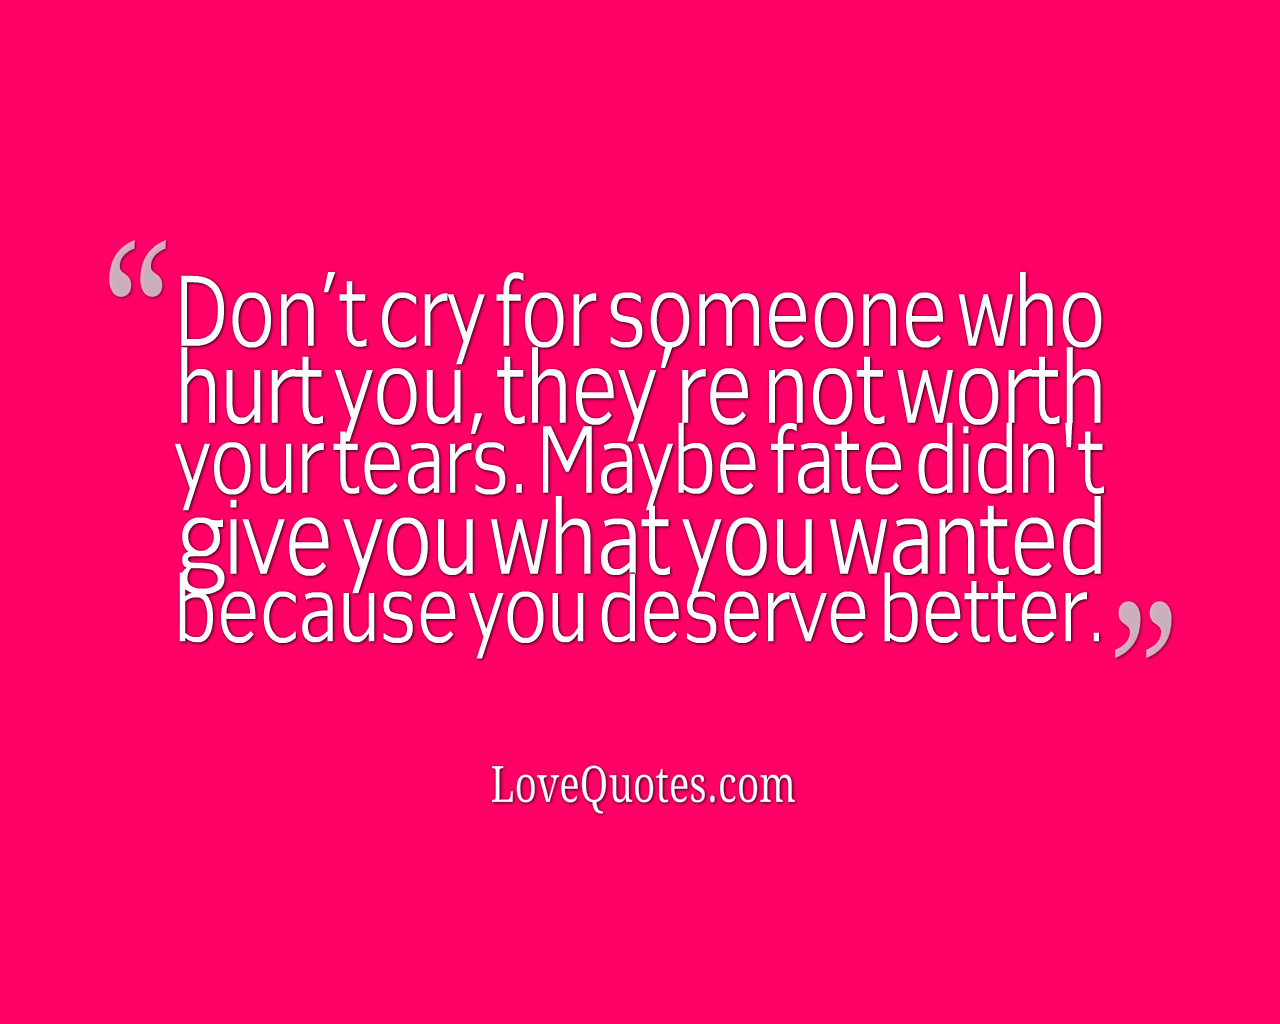 You Deserve More